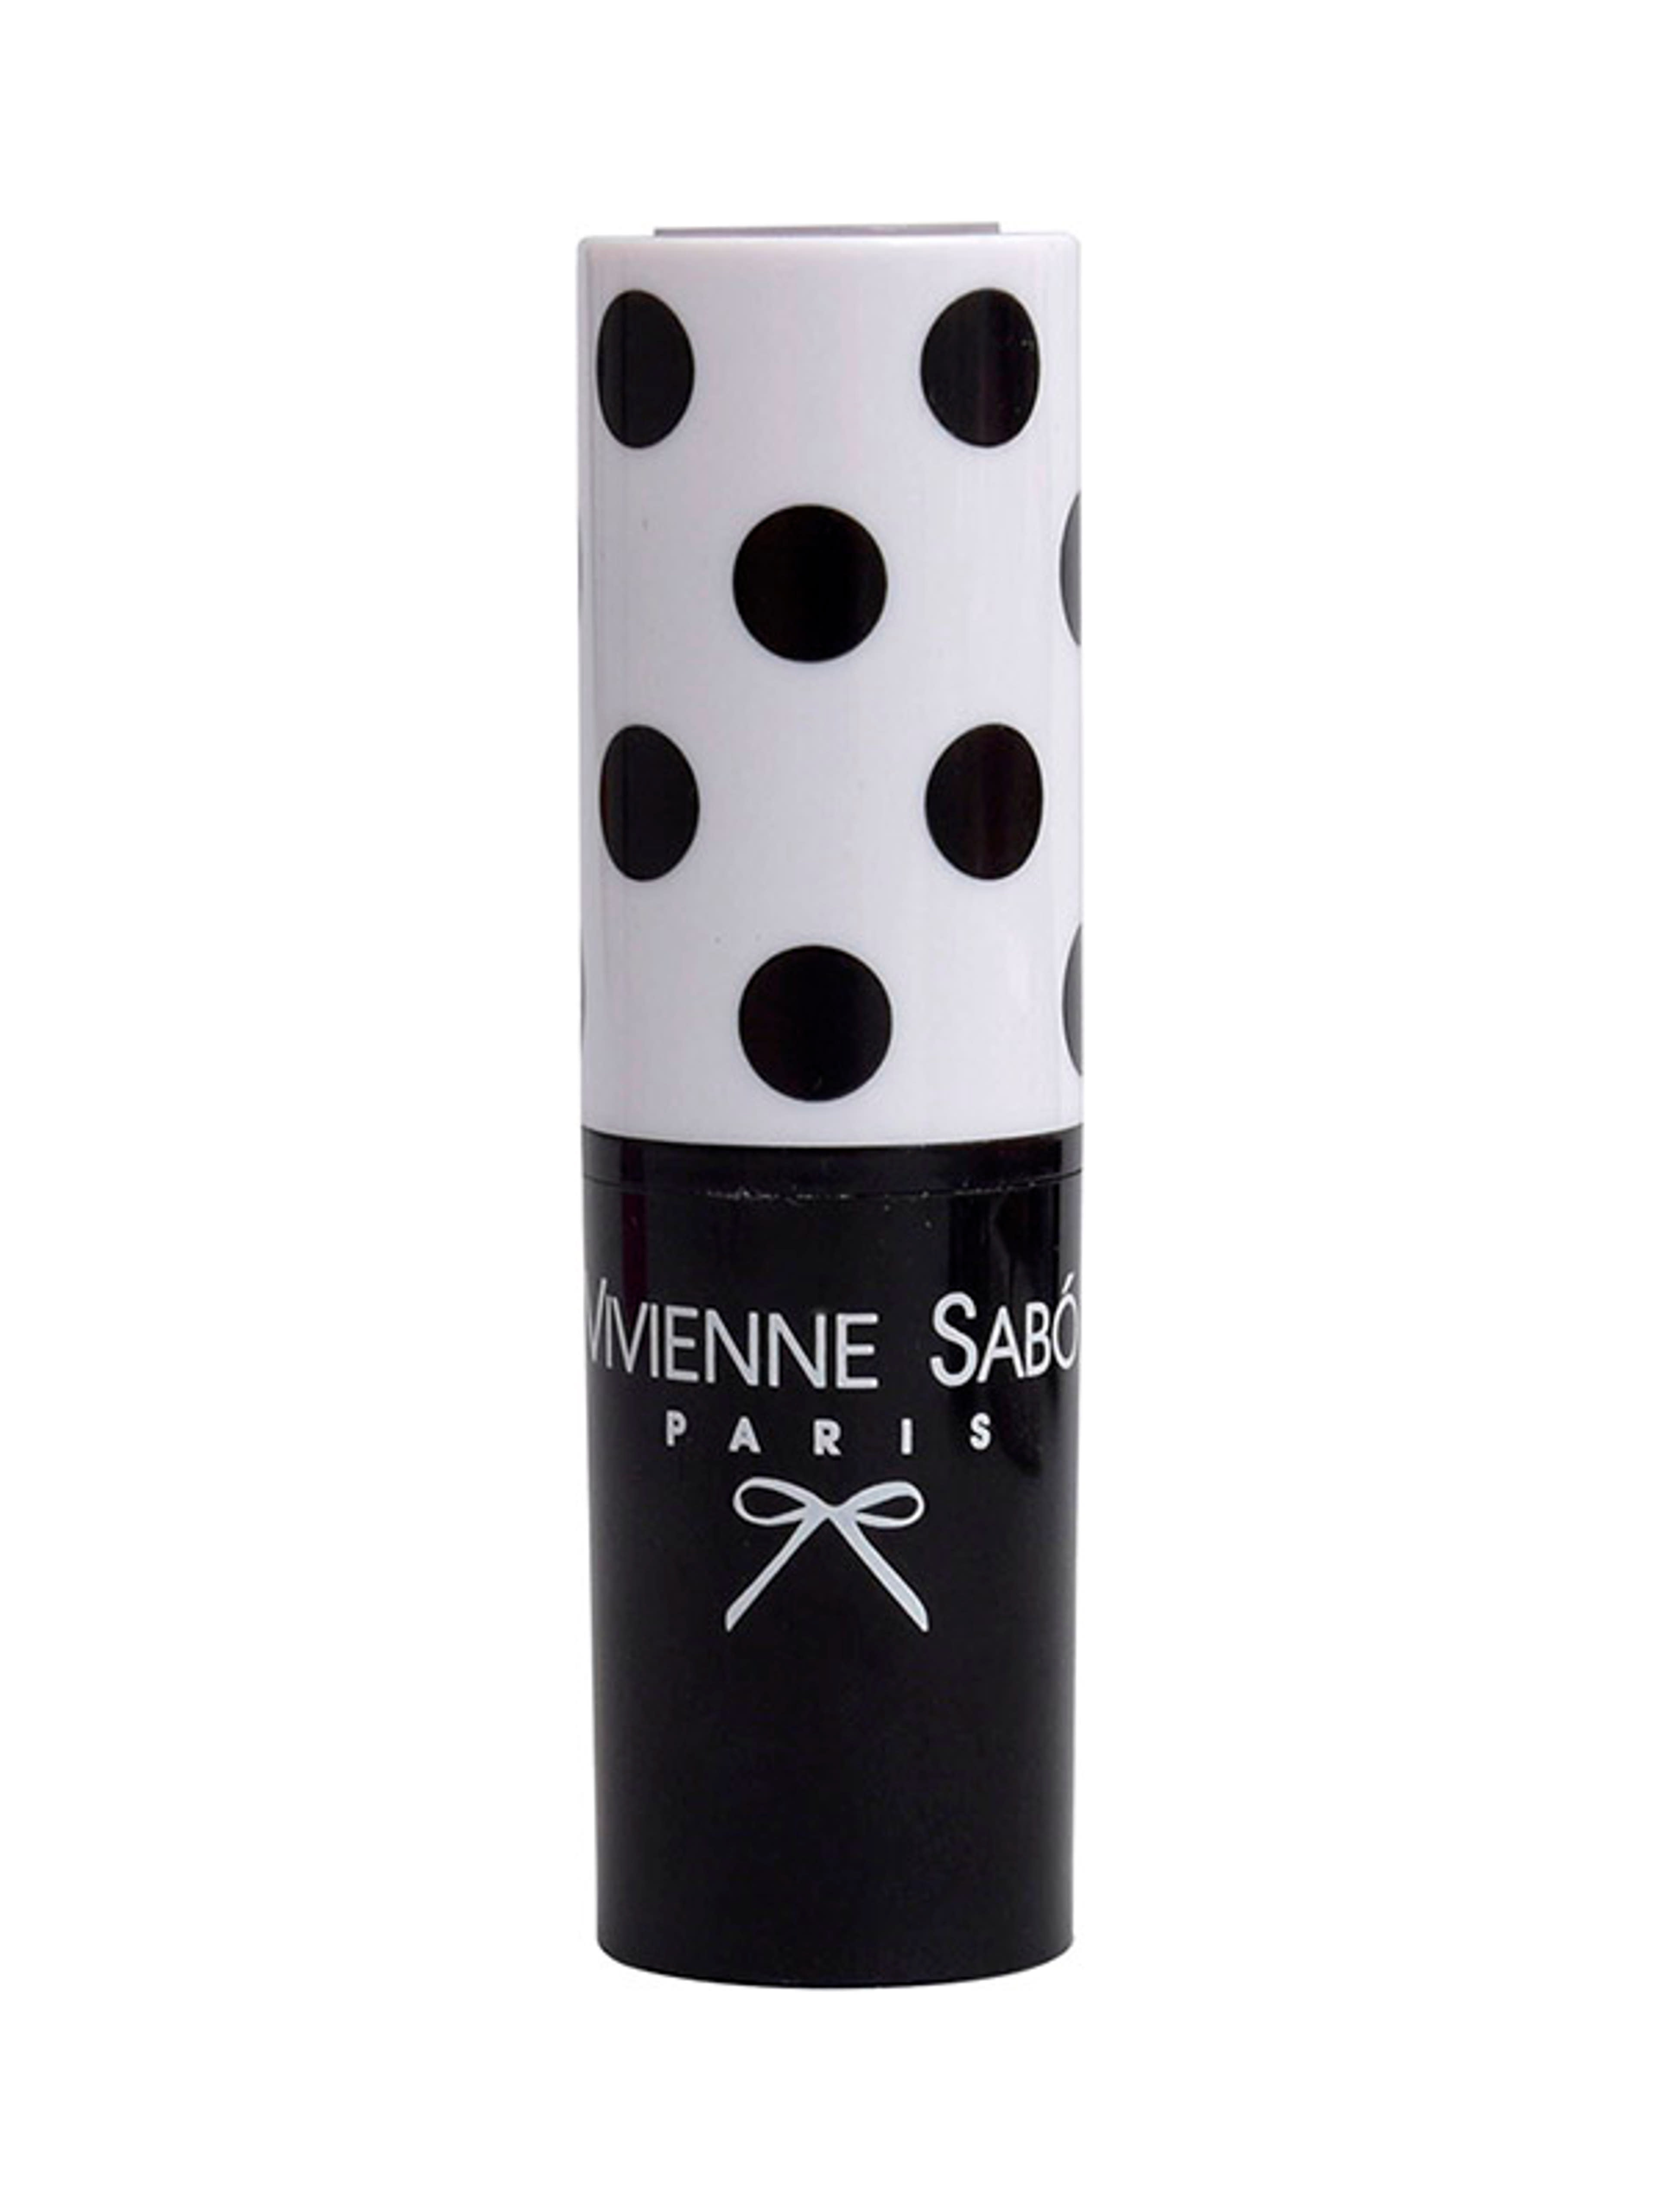 Vivienne Sabo rúzs merci 09 - 1 db-1